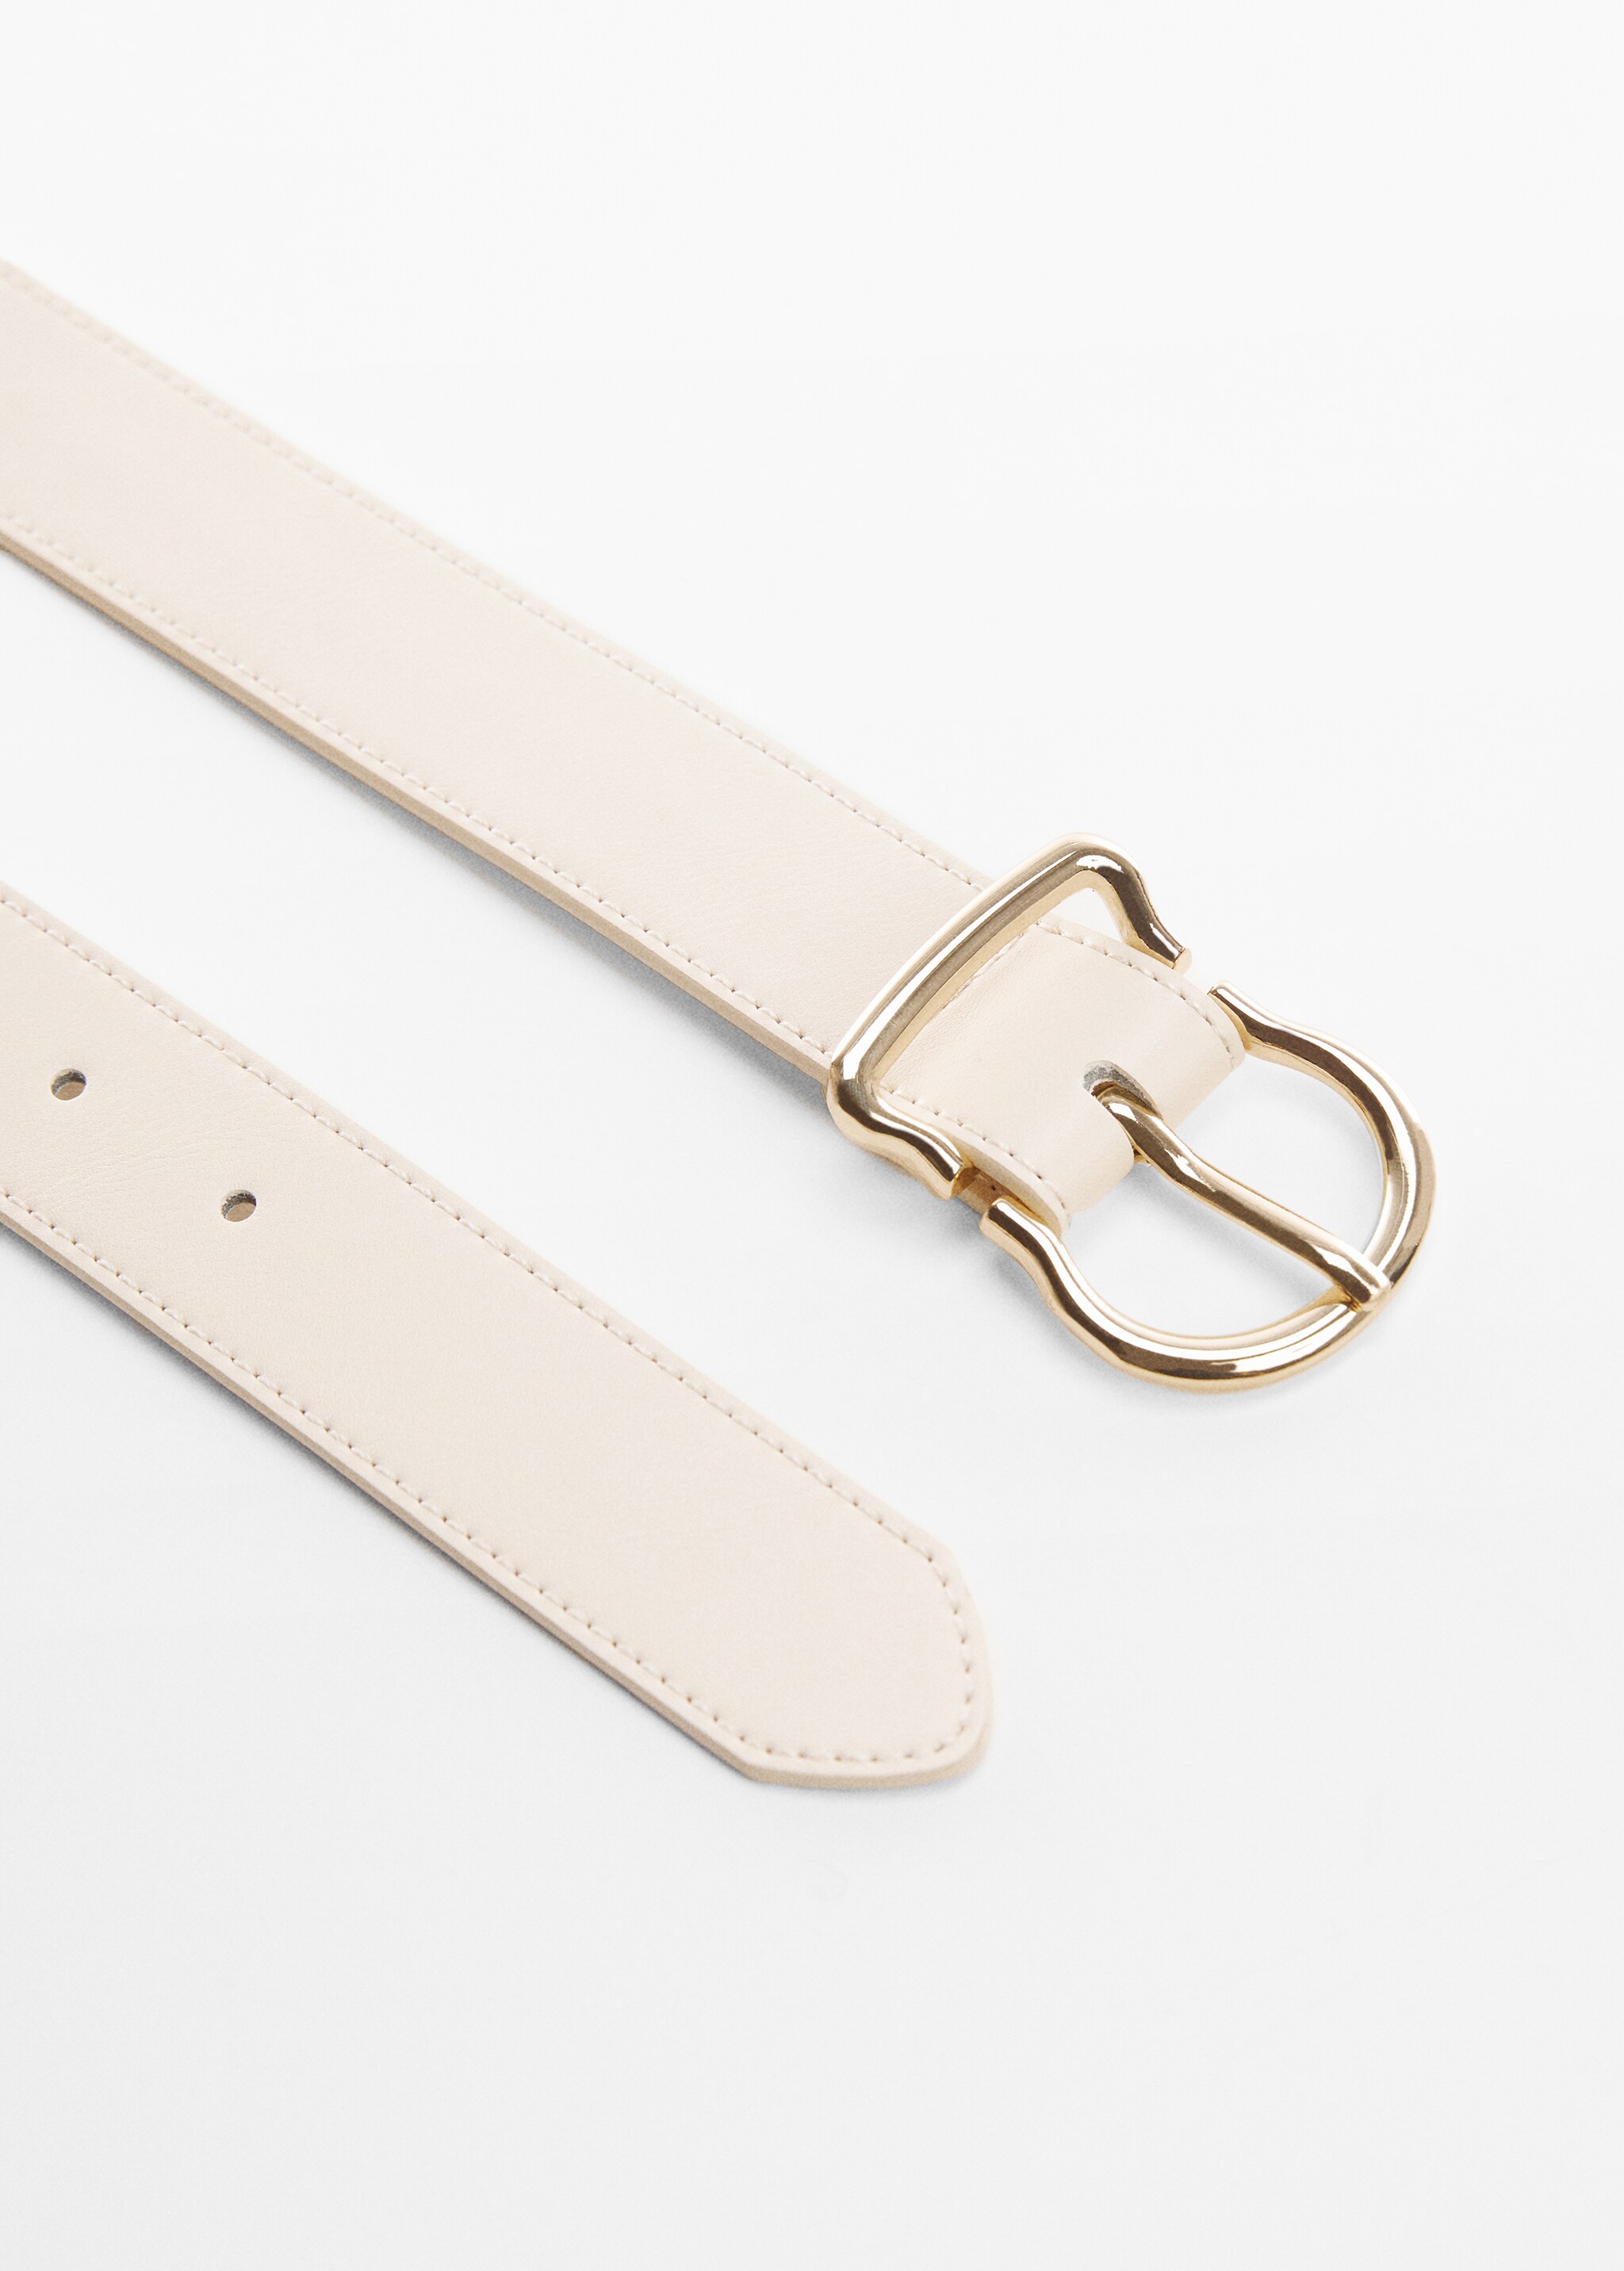 Faux-leather belt - Medium plane